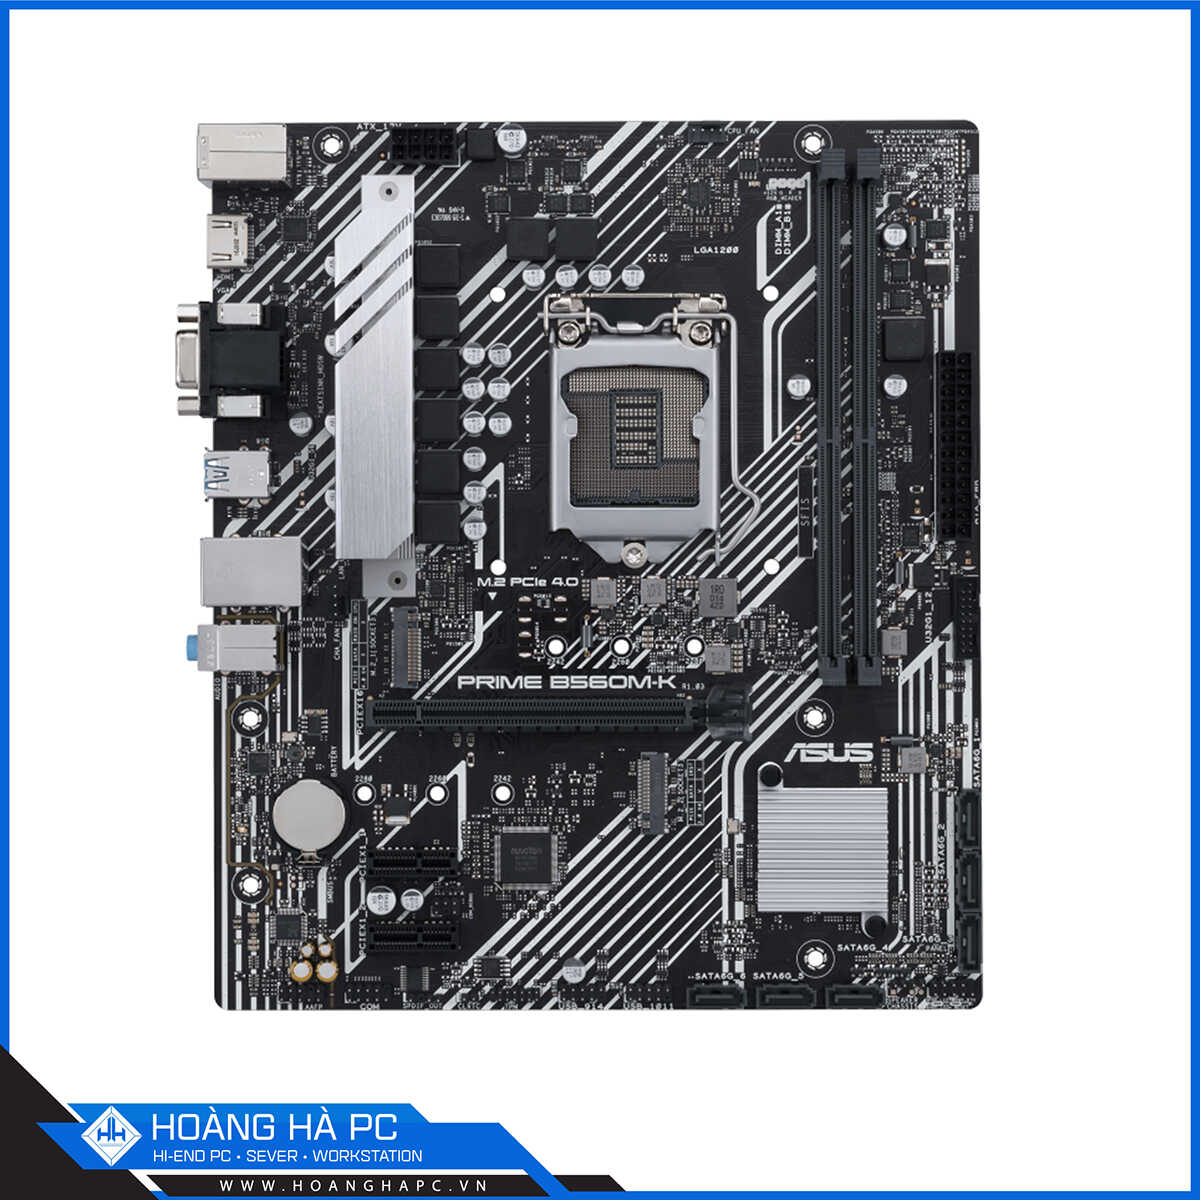 Mainboard ASUS PRIME B560M-K/CSM (Intel B560, LGA 1200, m-ATX, 2 khe Ram DDR4)